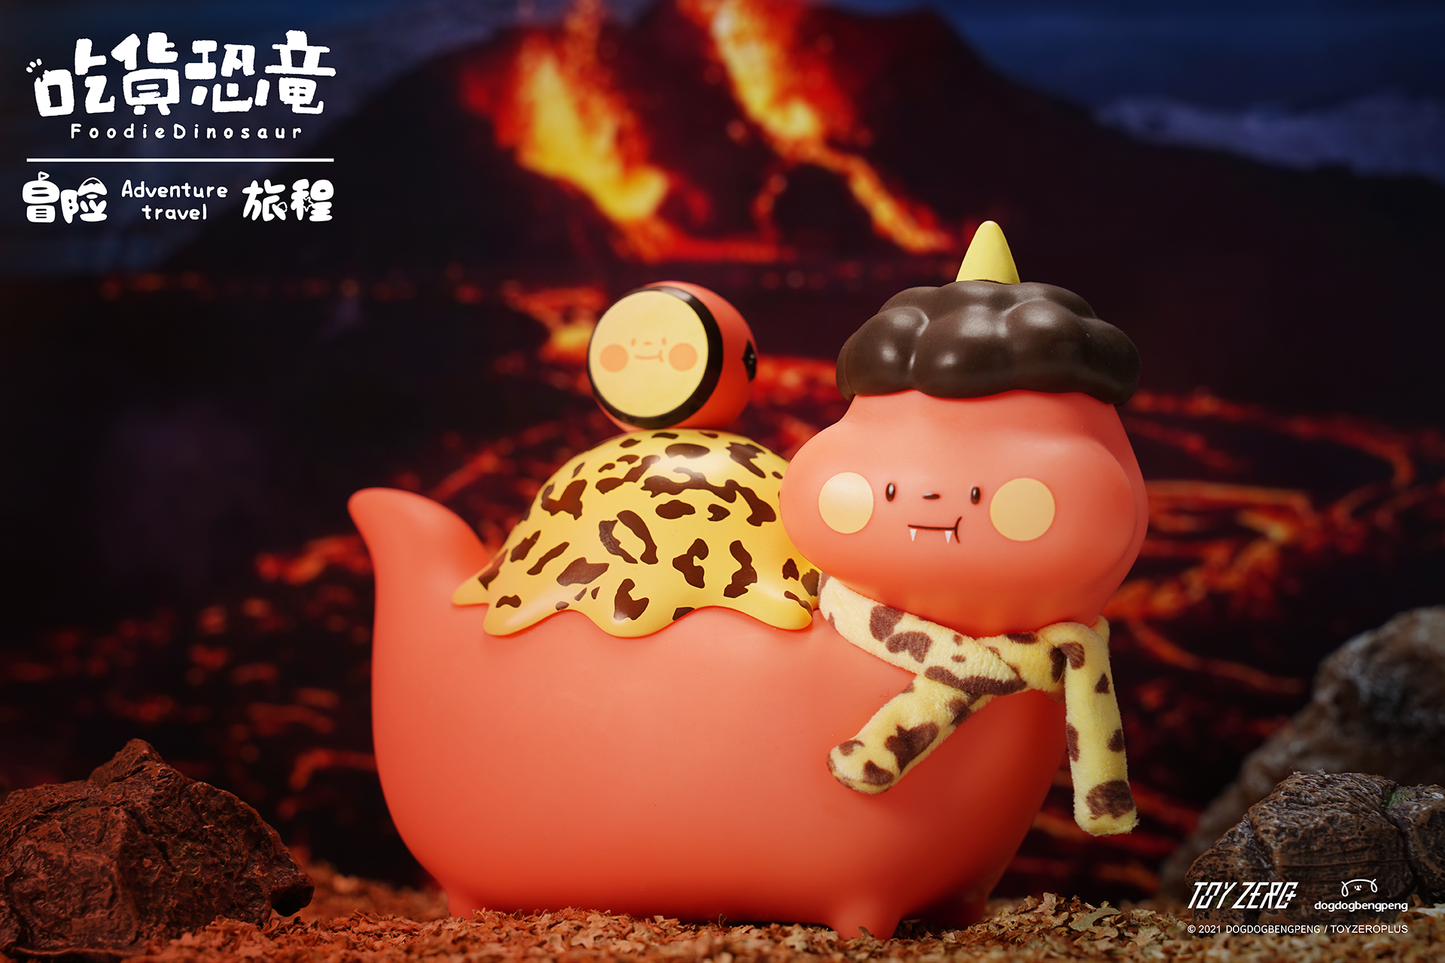 Foodie Dinosaur - Adventure Travel Red Demon 吃貨恐龍 赤之鬼雷龍